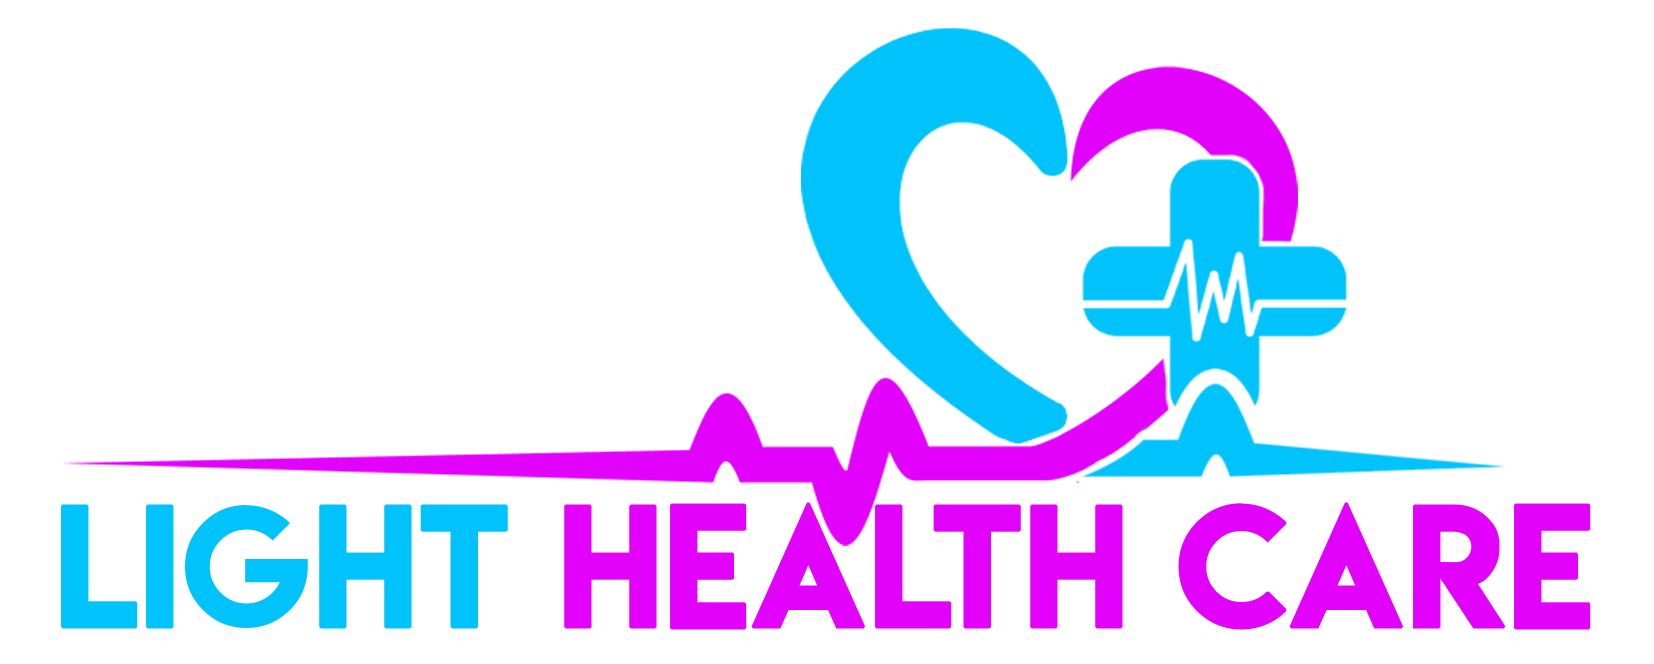 Light Health Care ltd-logo